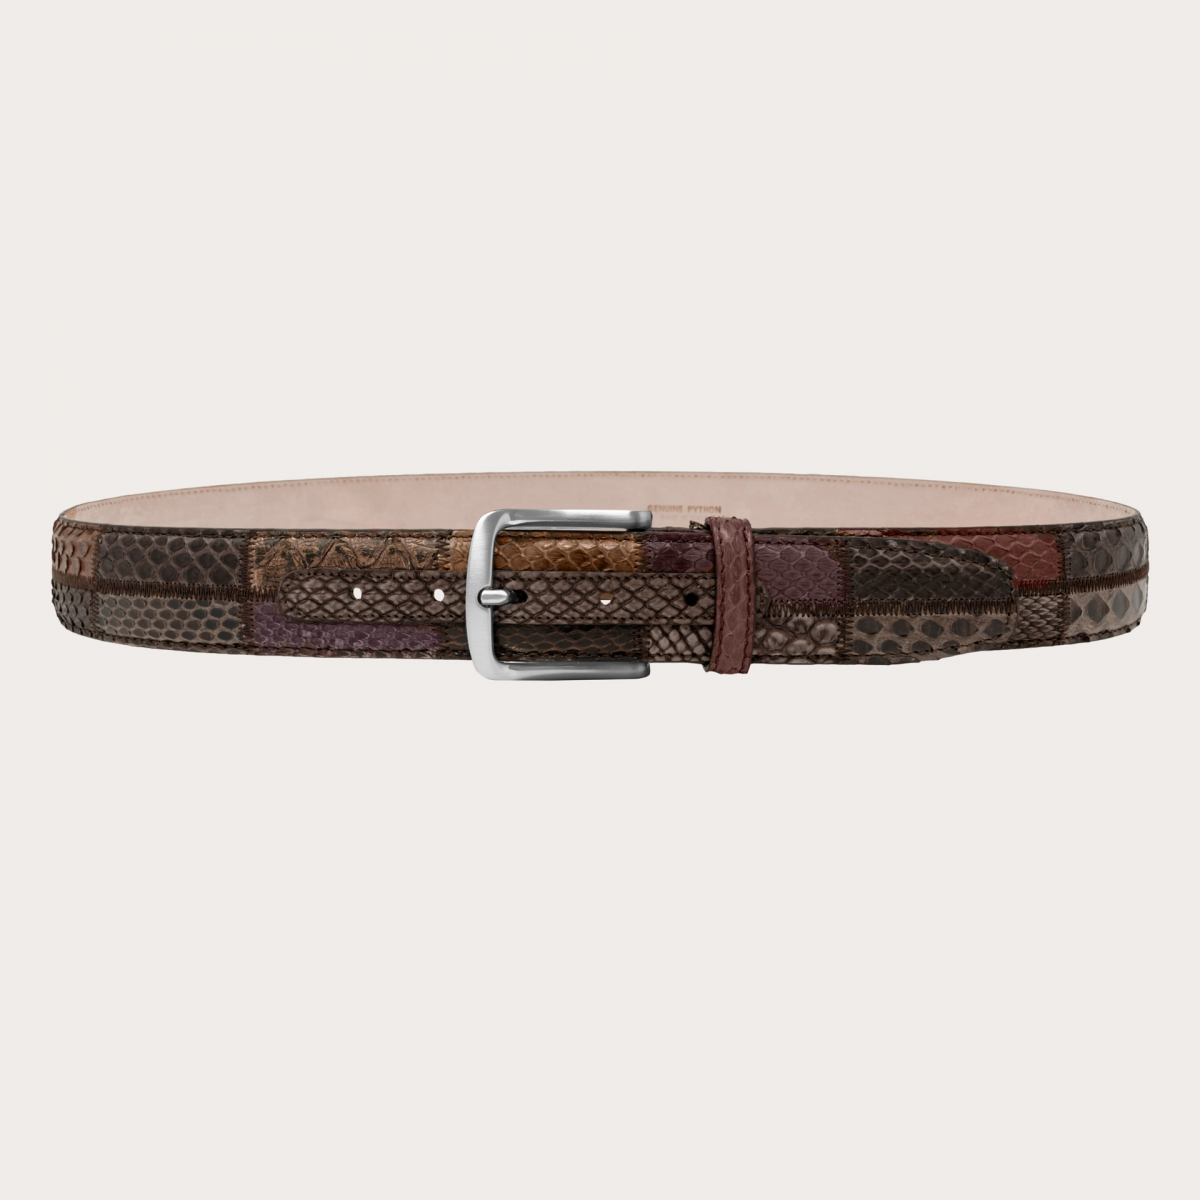 BRUCLE Genuine python leather belt, brown patchwork